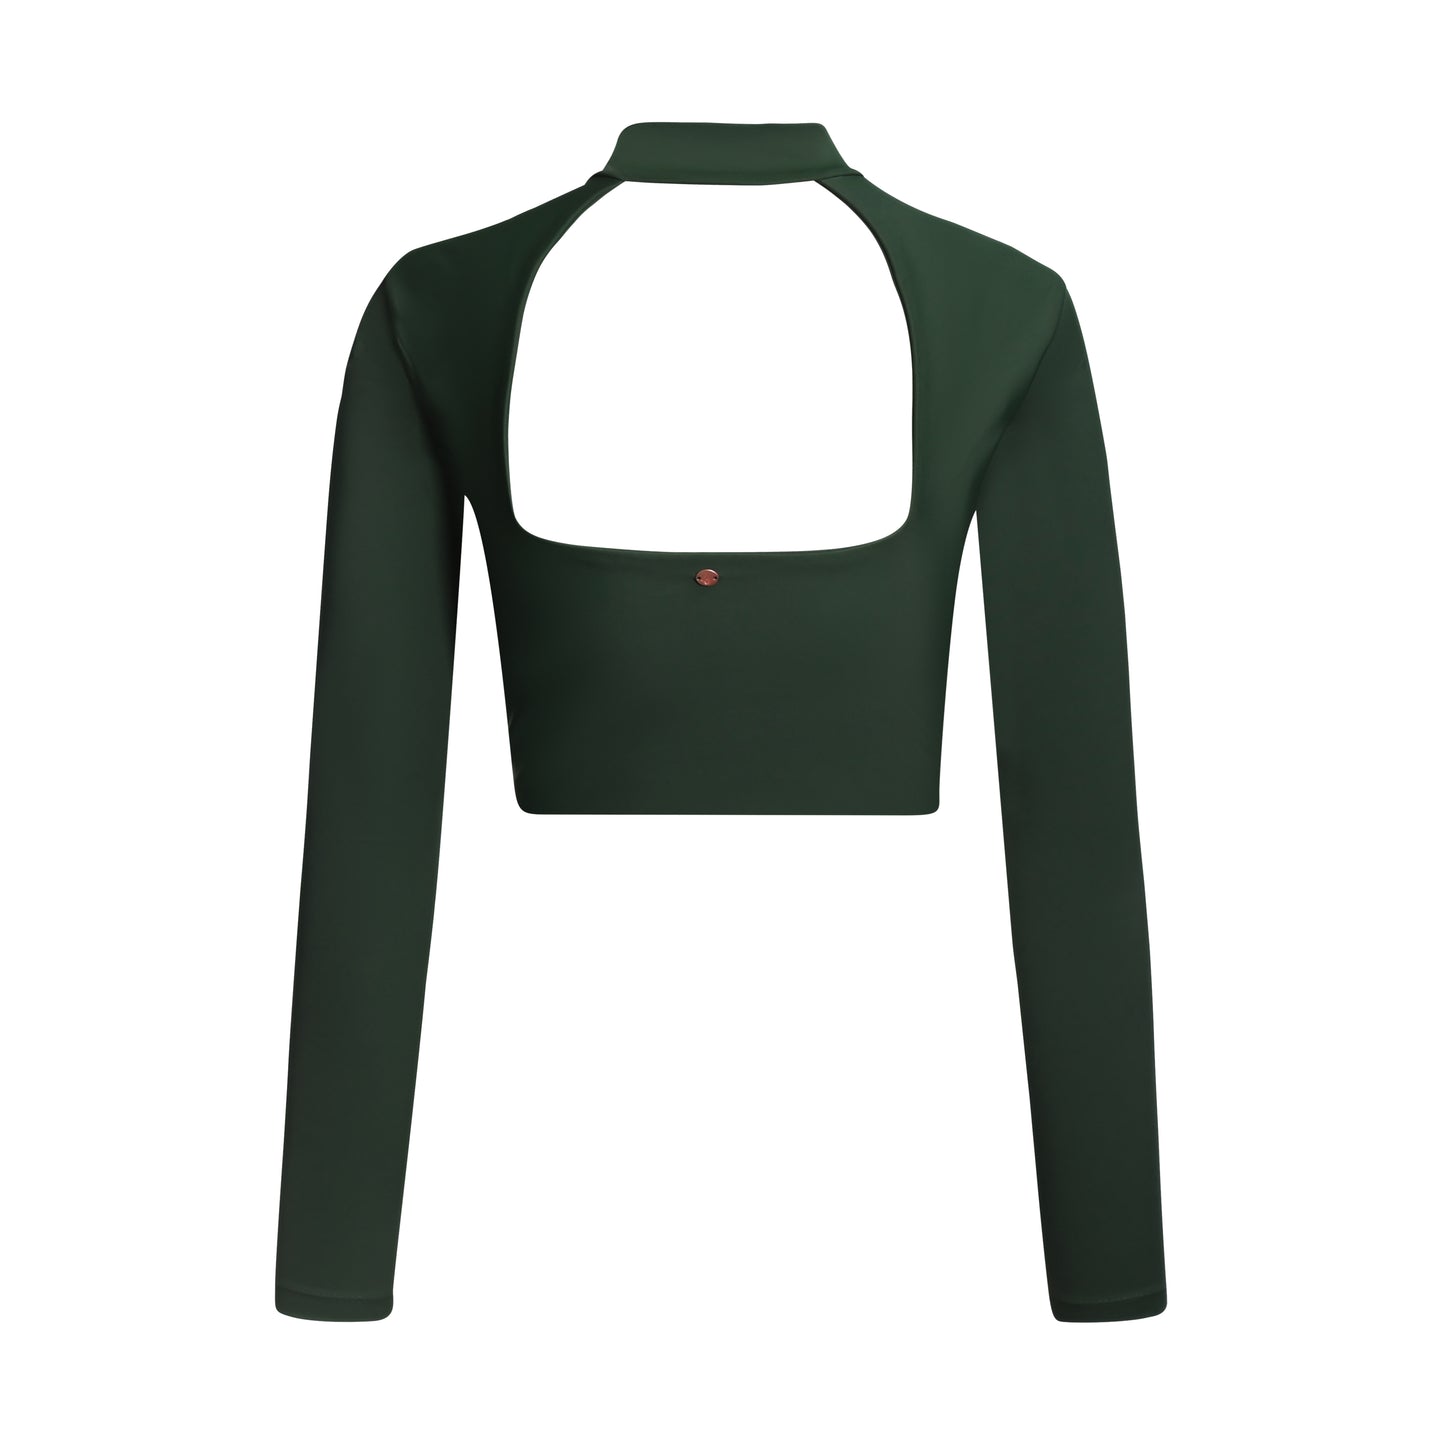 surf cropped top rashguard long sleeves swimsuit army green khaki